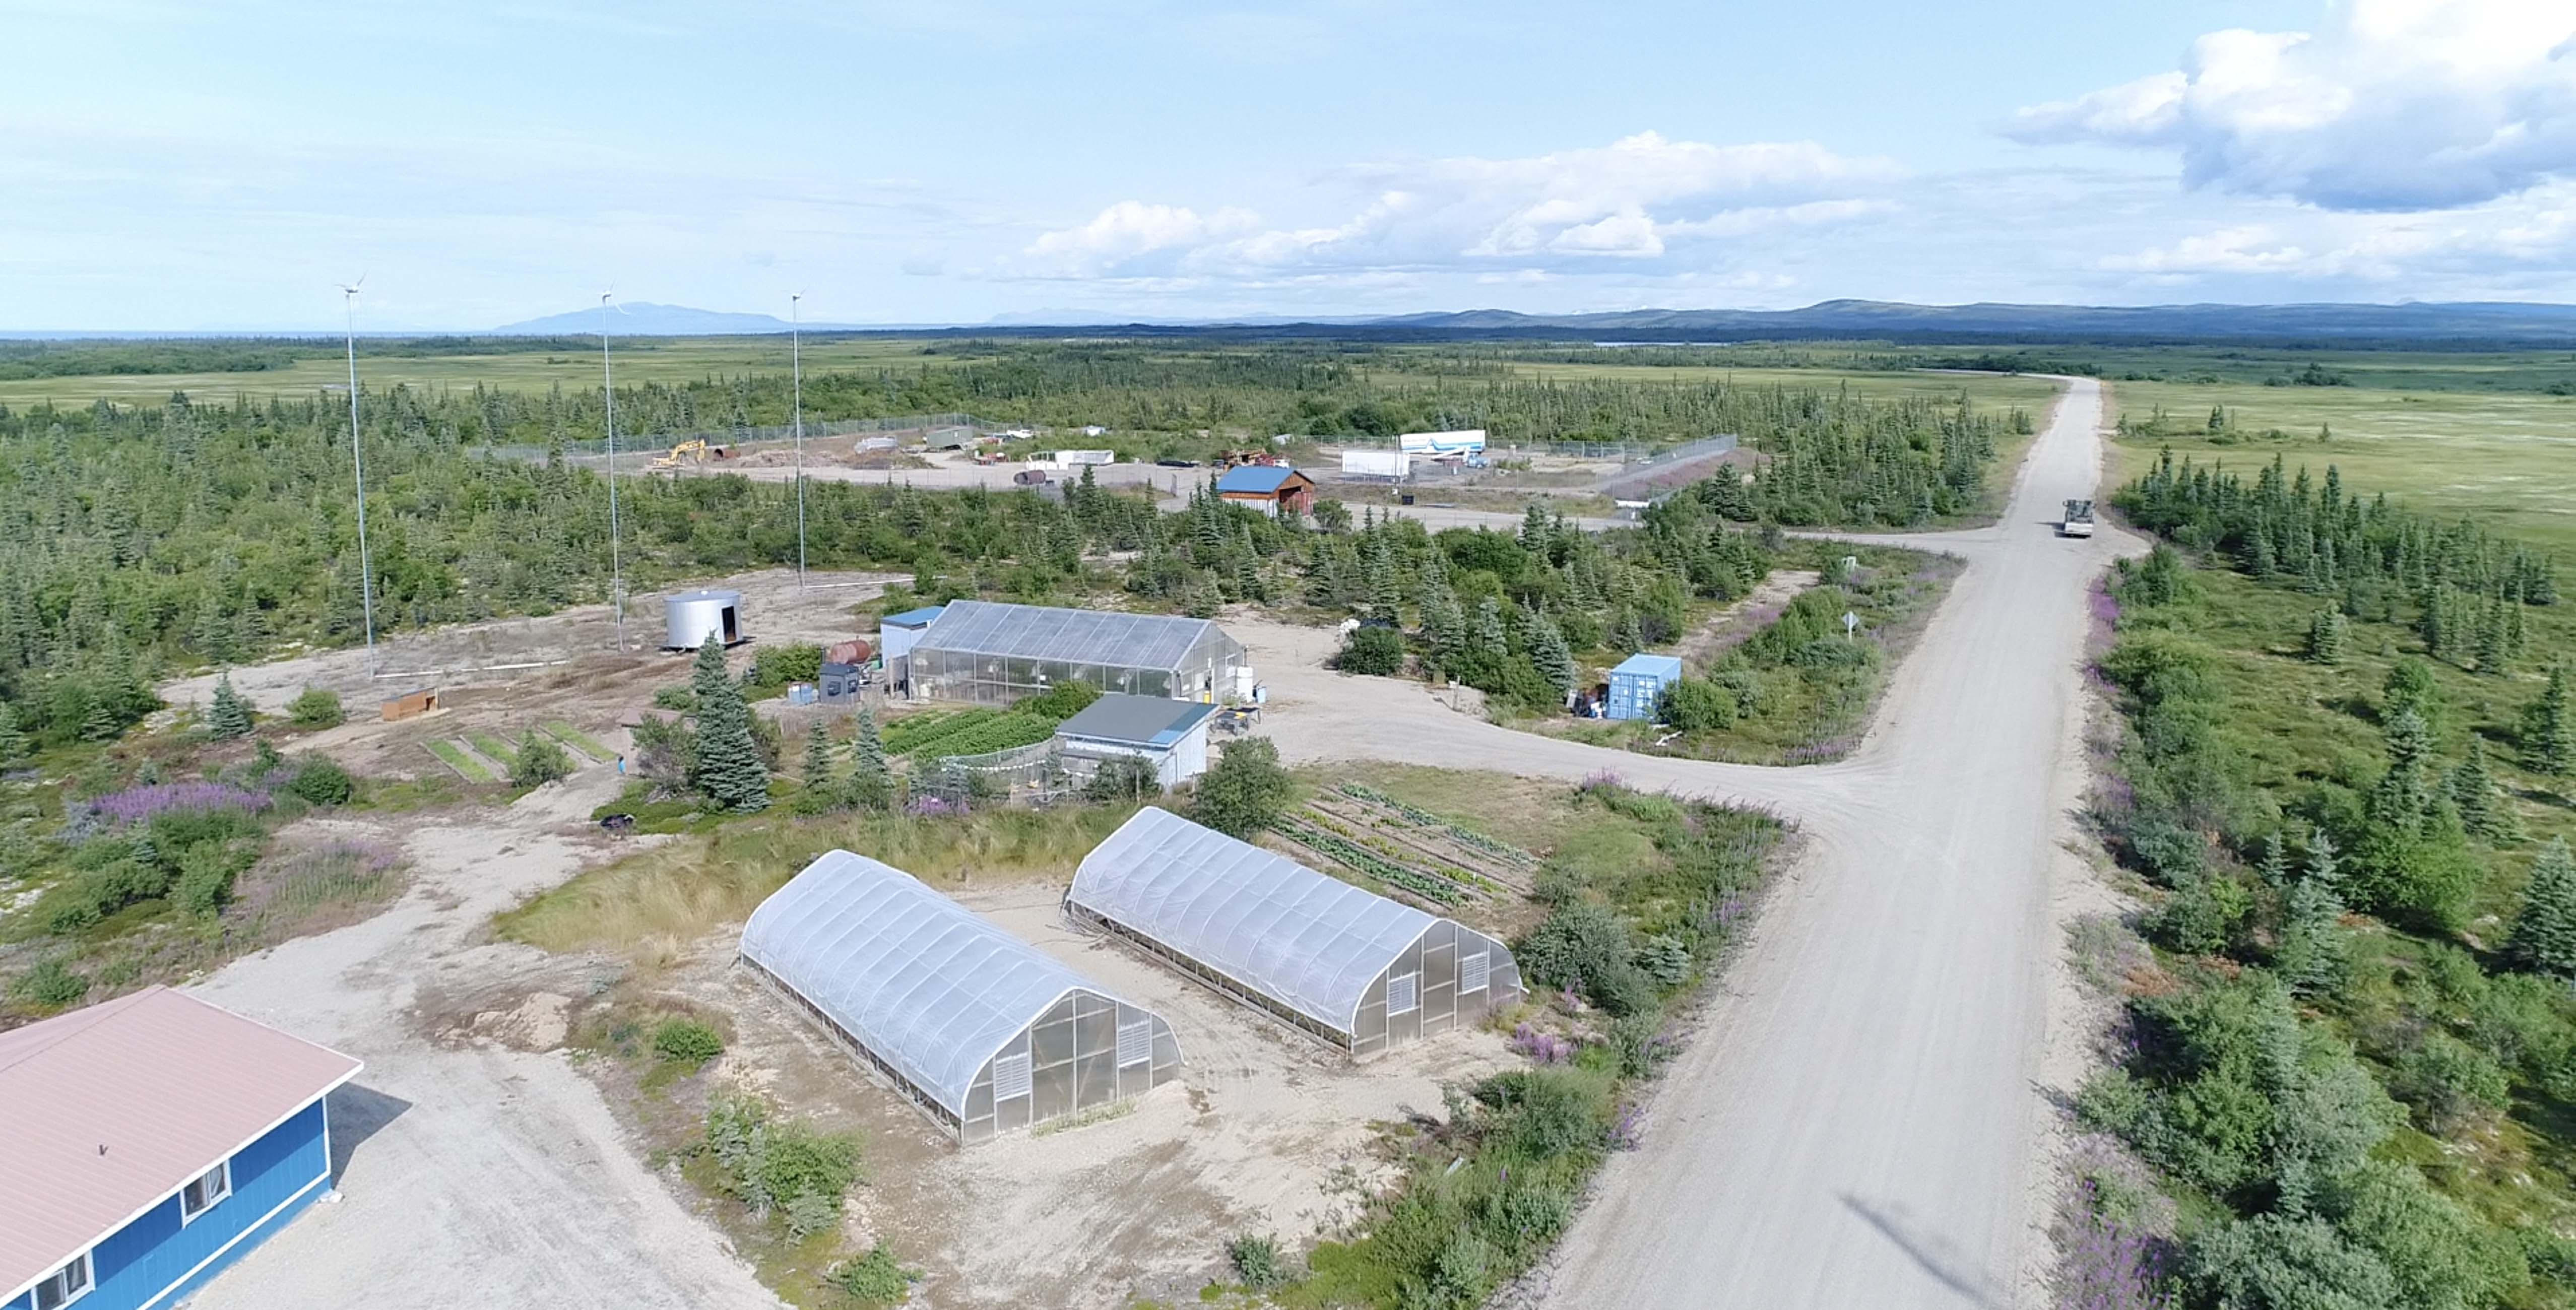 New Film Shares Alaska Community’s Path to Sustainability